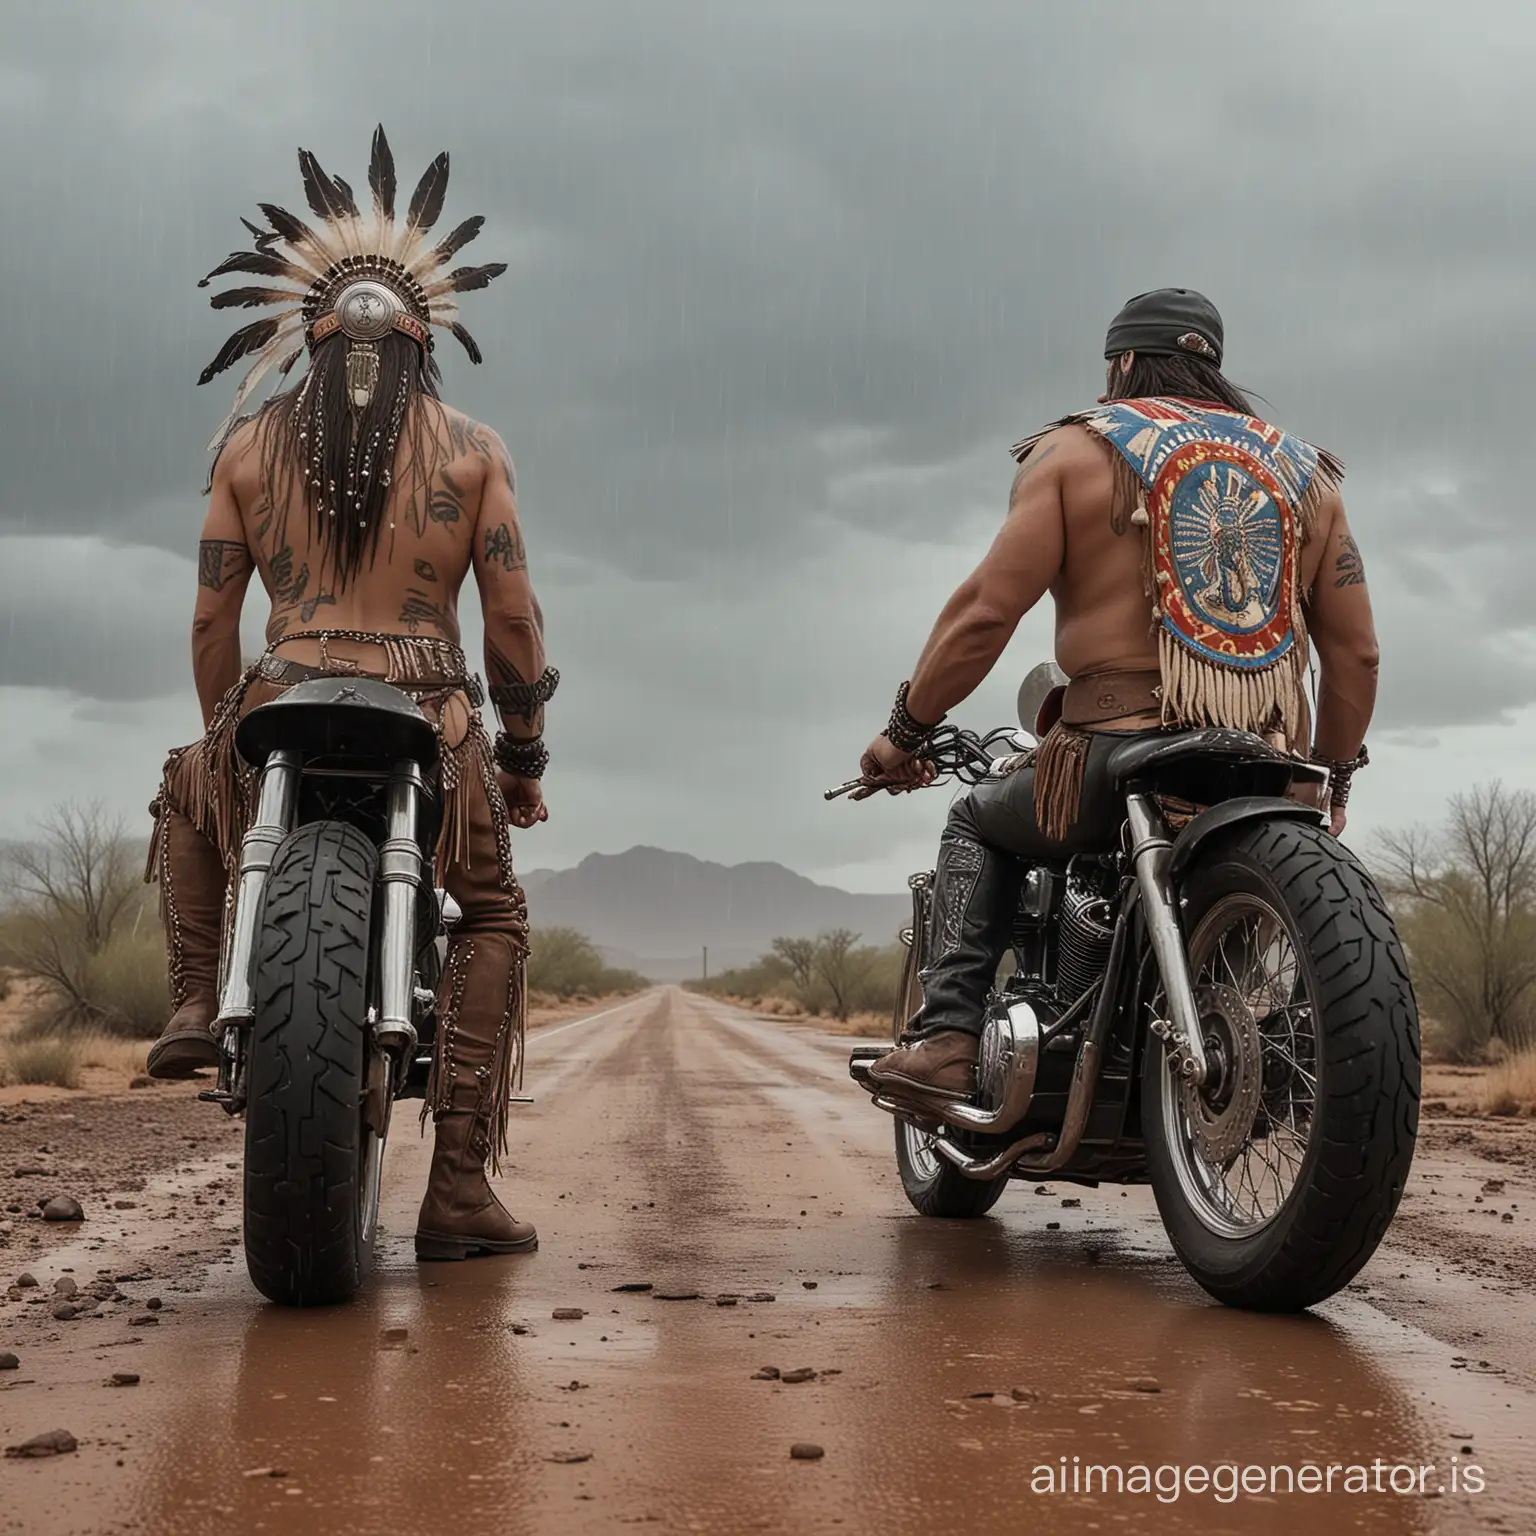 Native-American-Shaman-and-Biker-Encounter-in-Rainy-Arizona-Desert